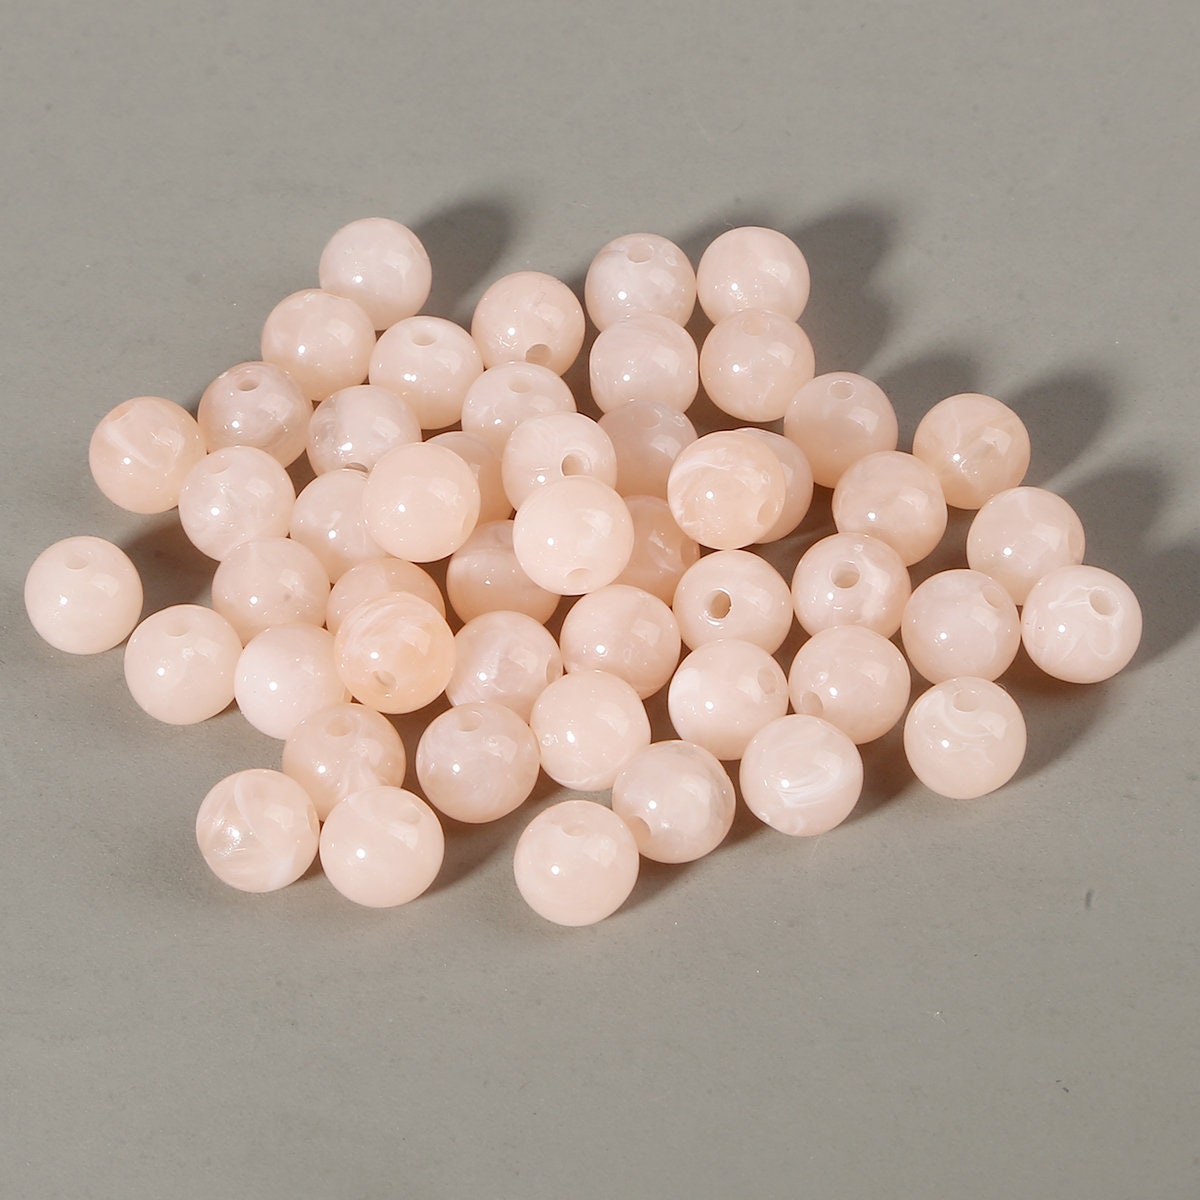 Bubblegum Beads Frosted Peach Acrylic Round Gumball Beads Plastic Round Bead Chunky Beads 8mm Matte Peach Round Beads #1799